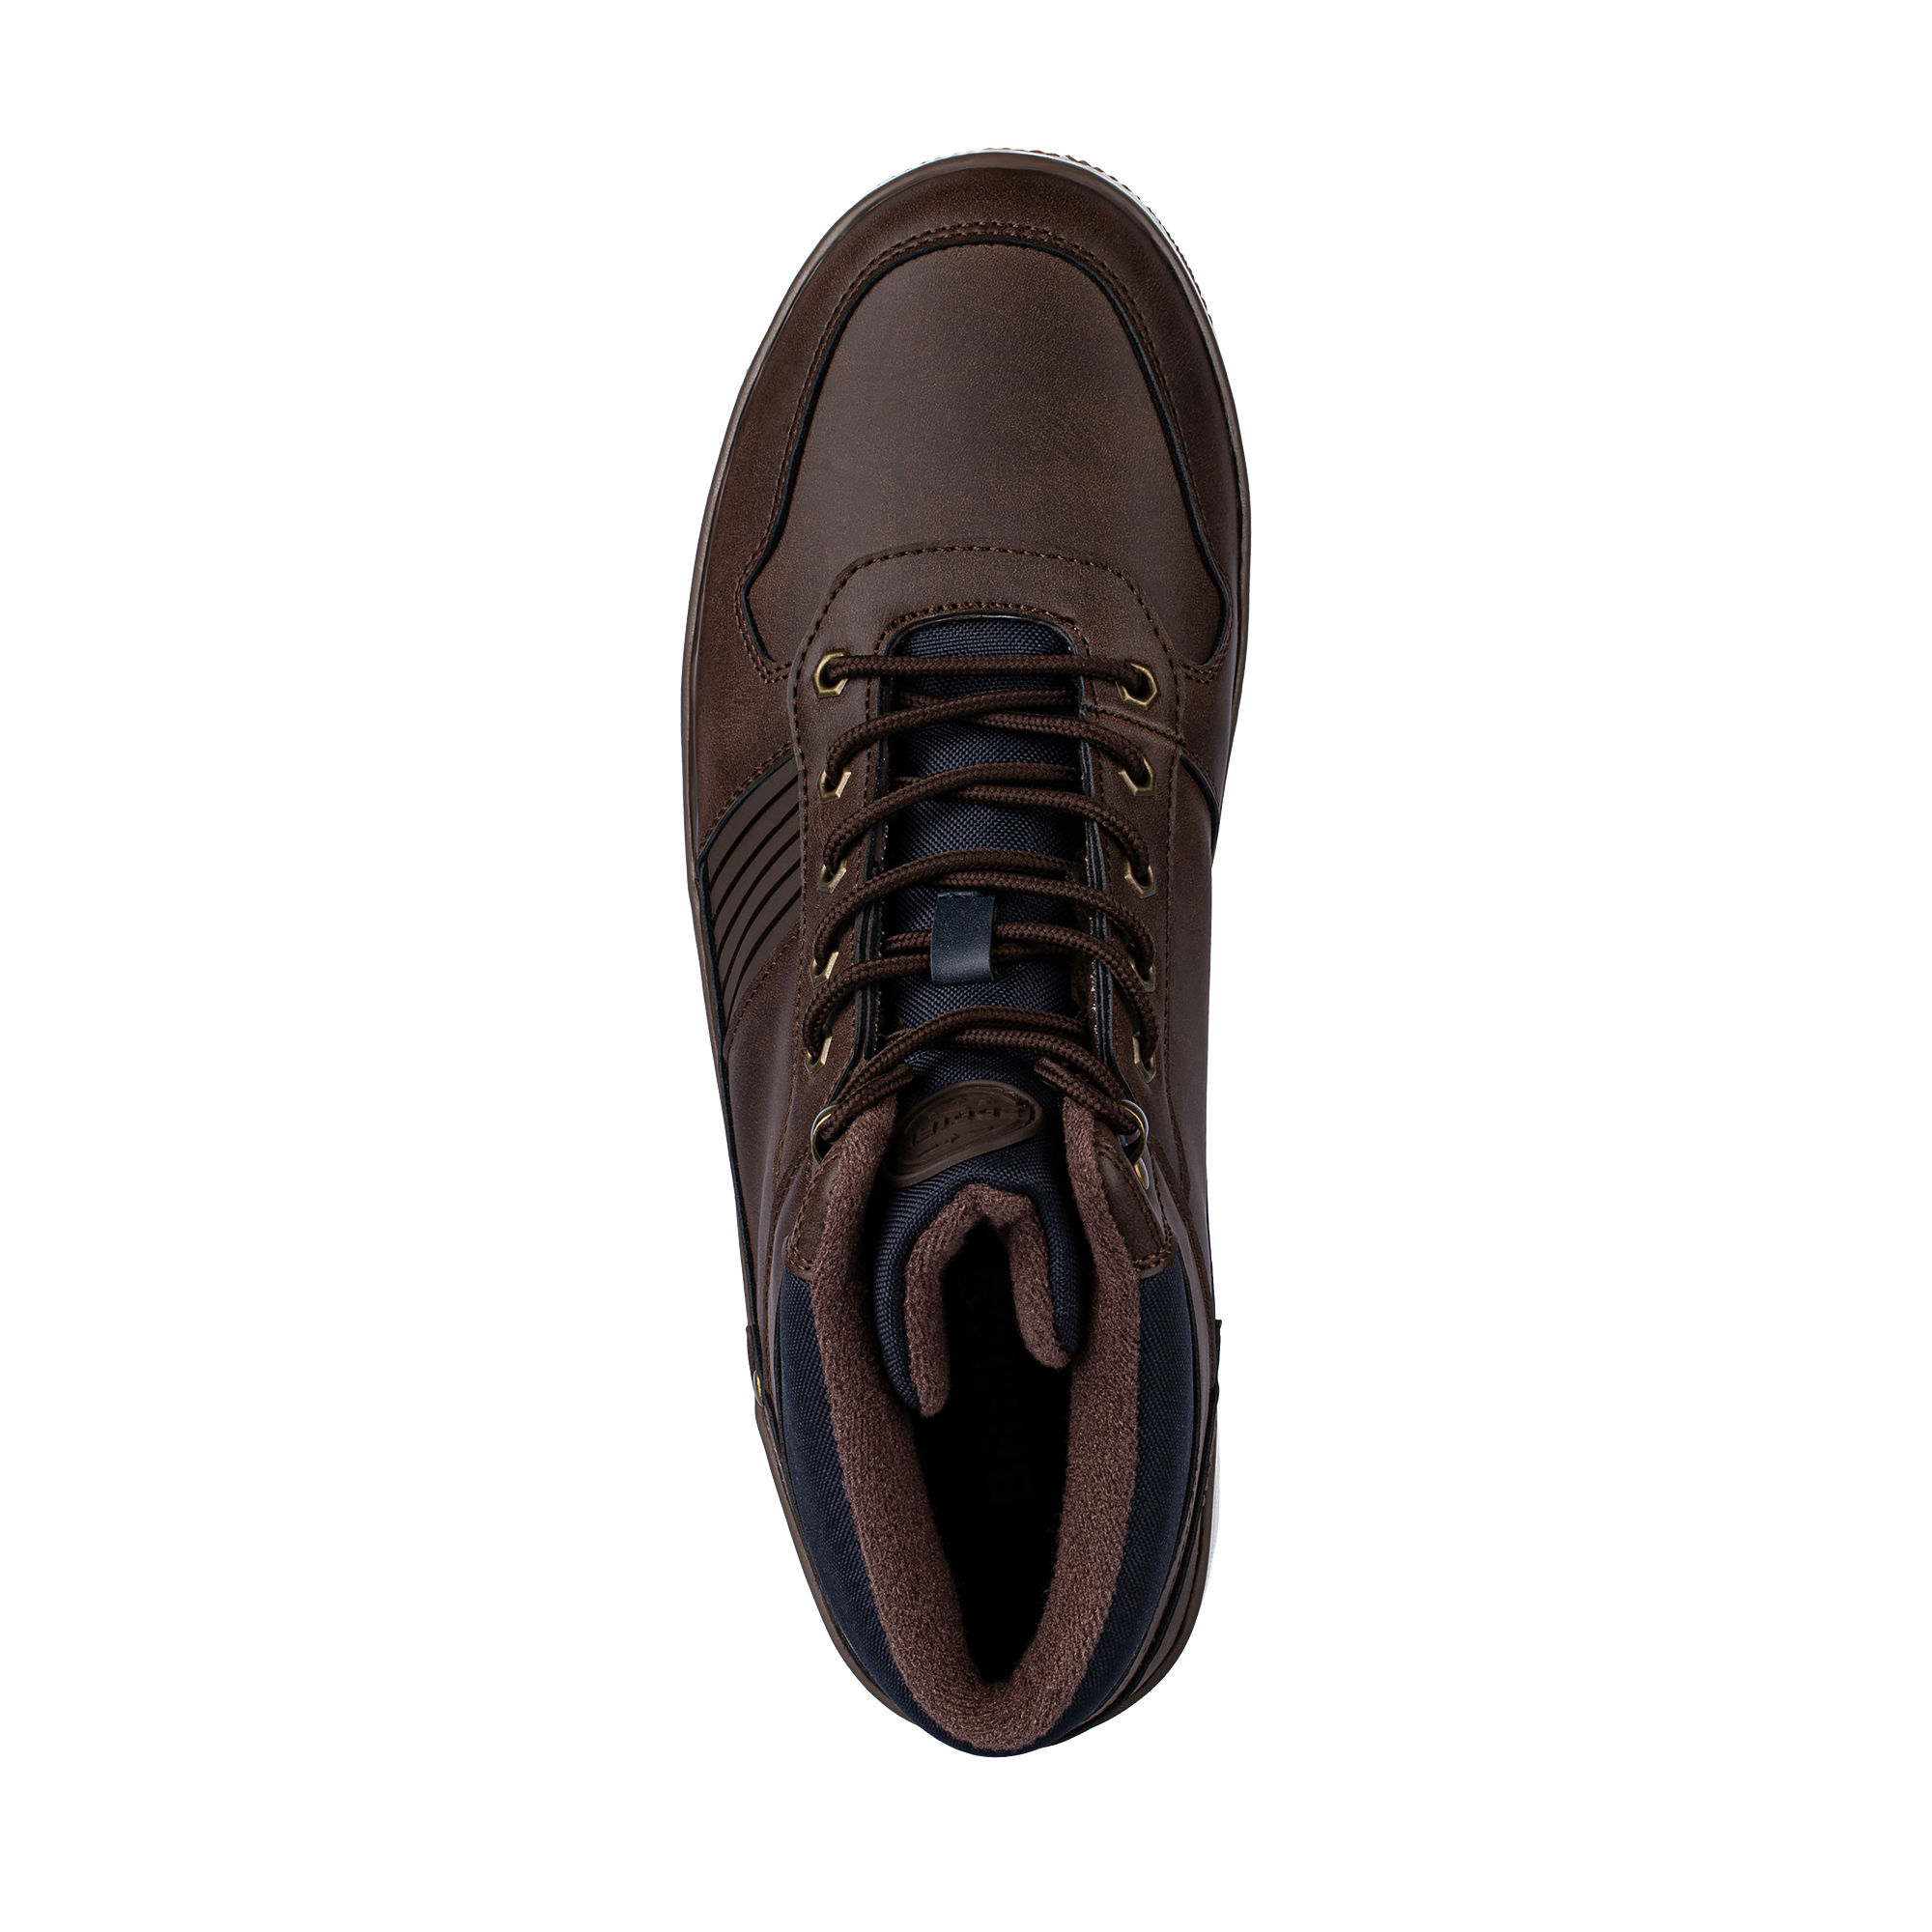 Ботинки BRIGGS 064-111B-4609, цвет темно-коричневый, размер 40 - фото 5